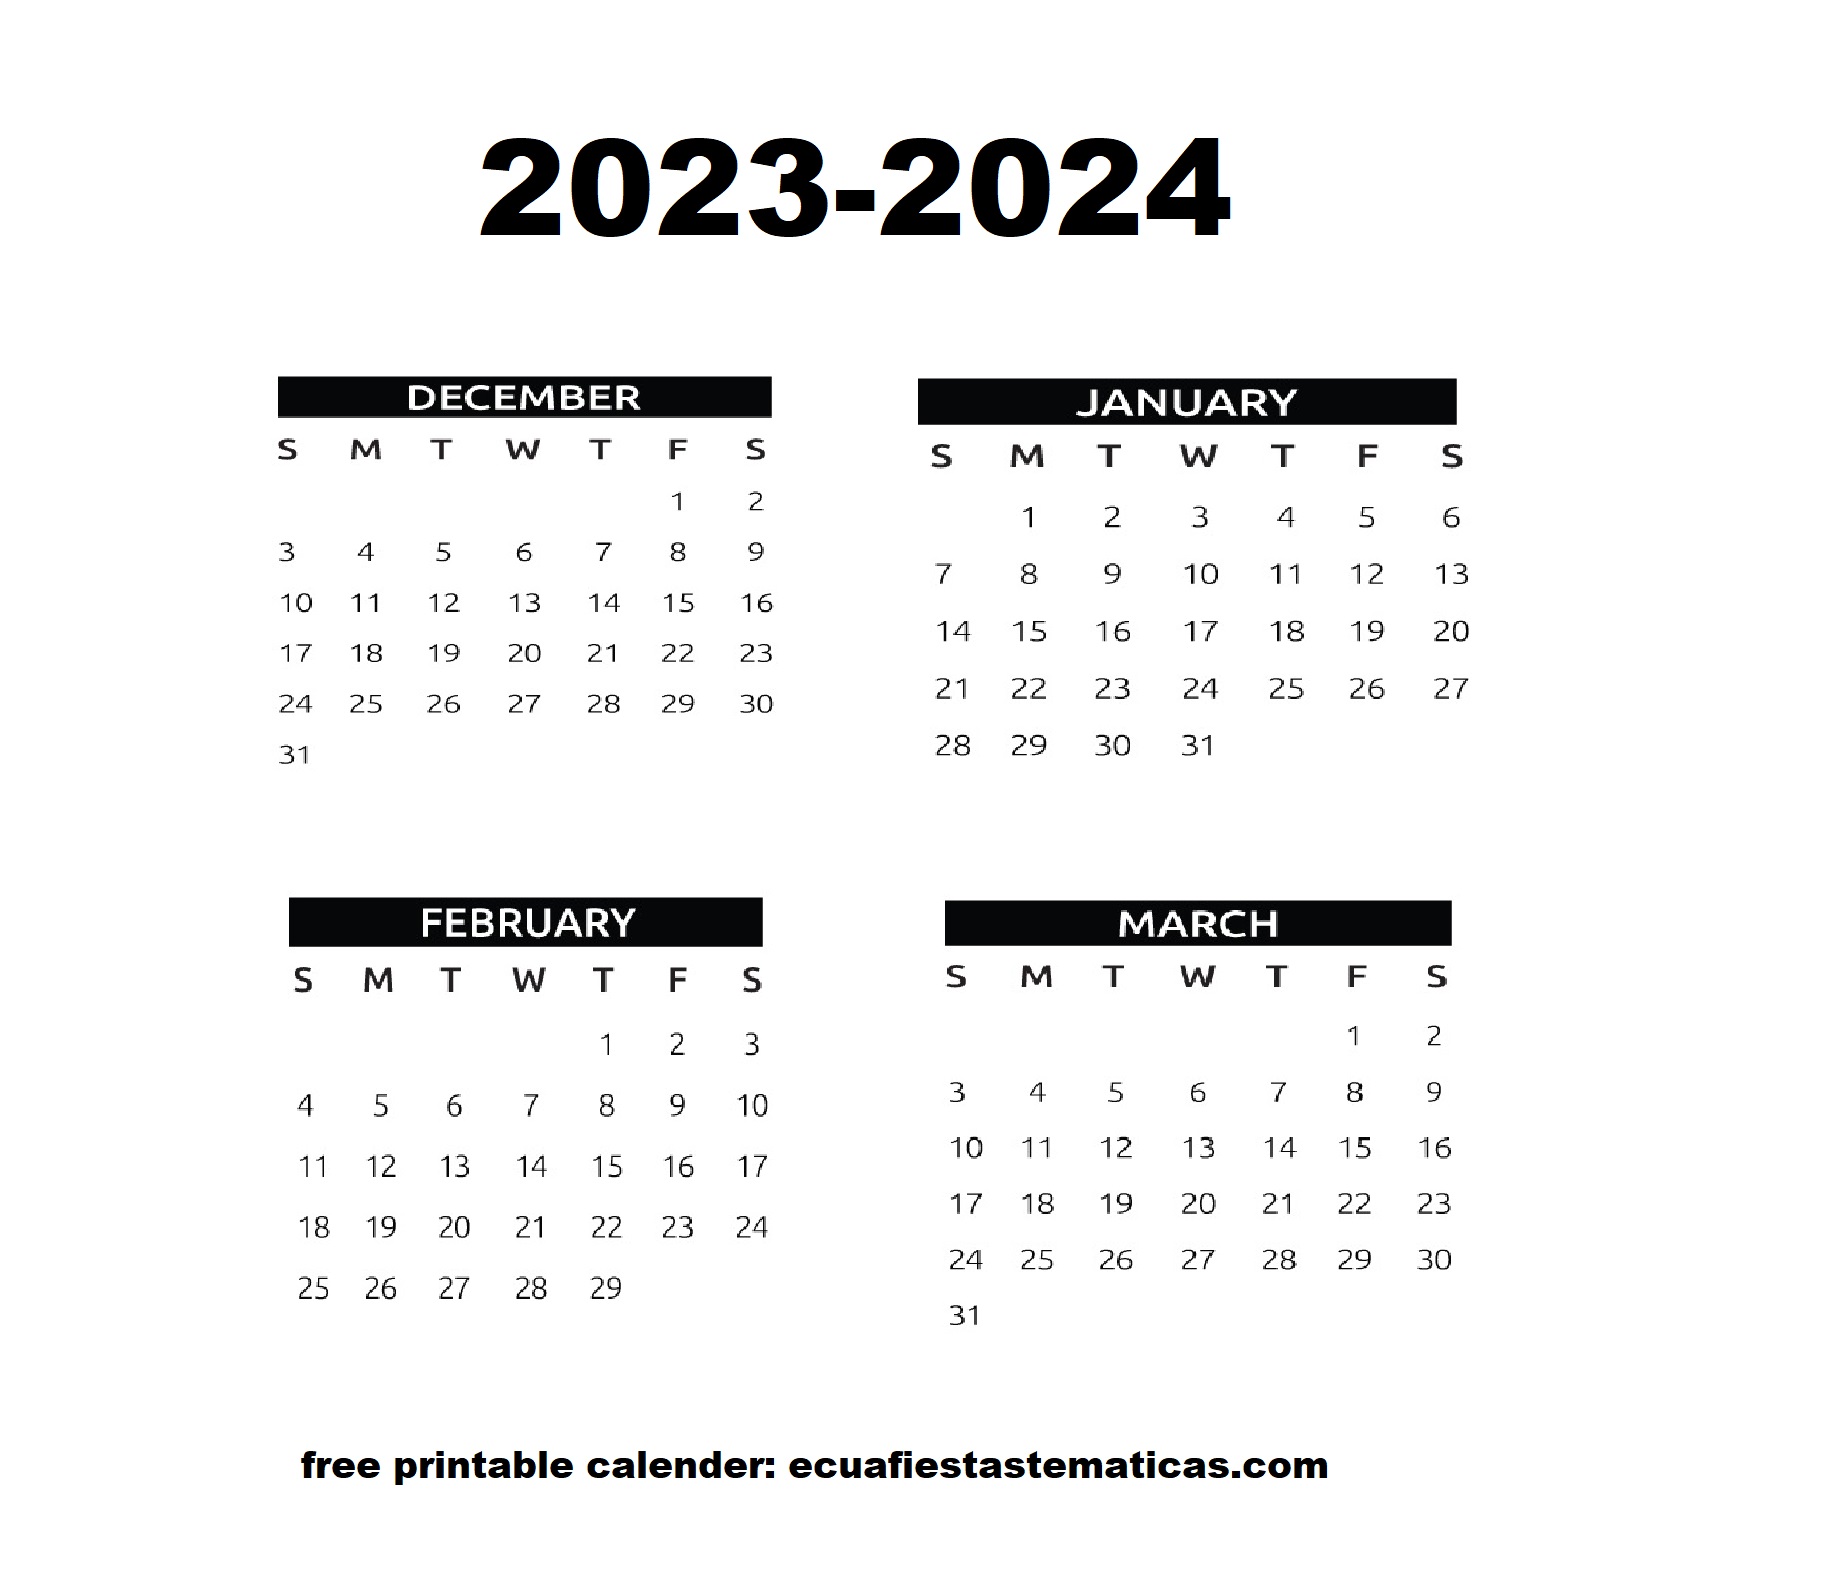 December to March 2023 2024 Calendar